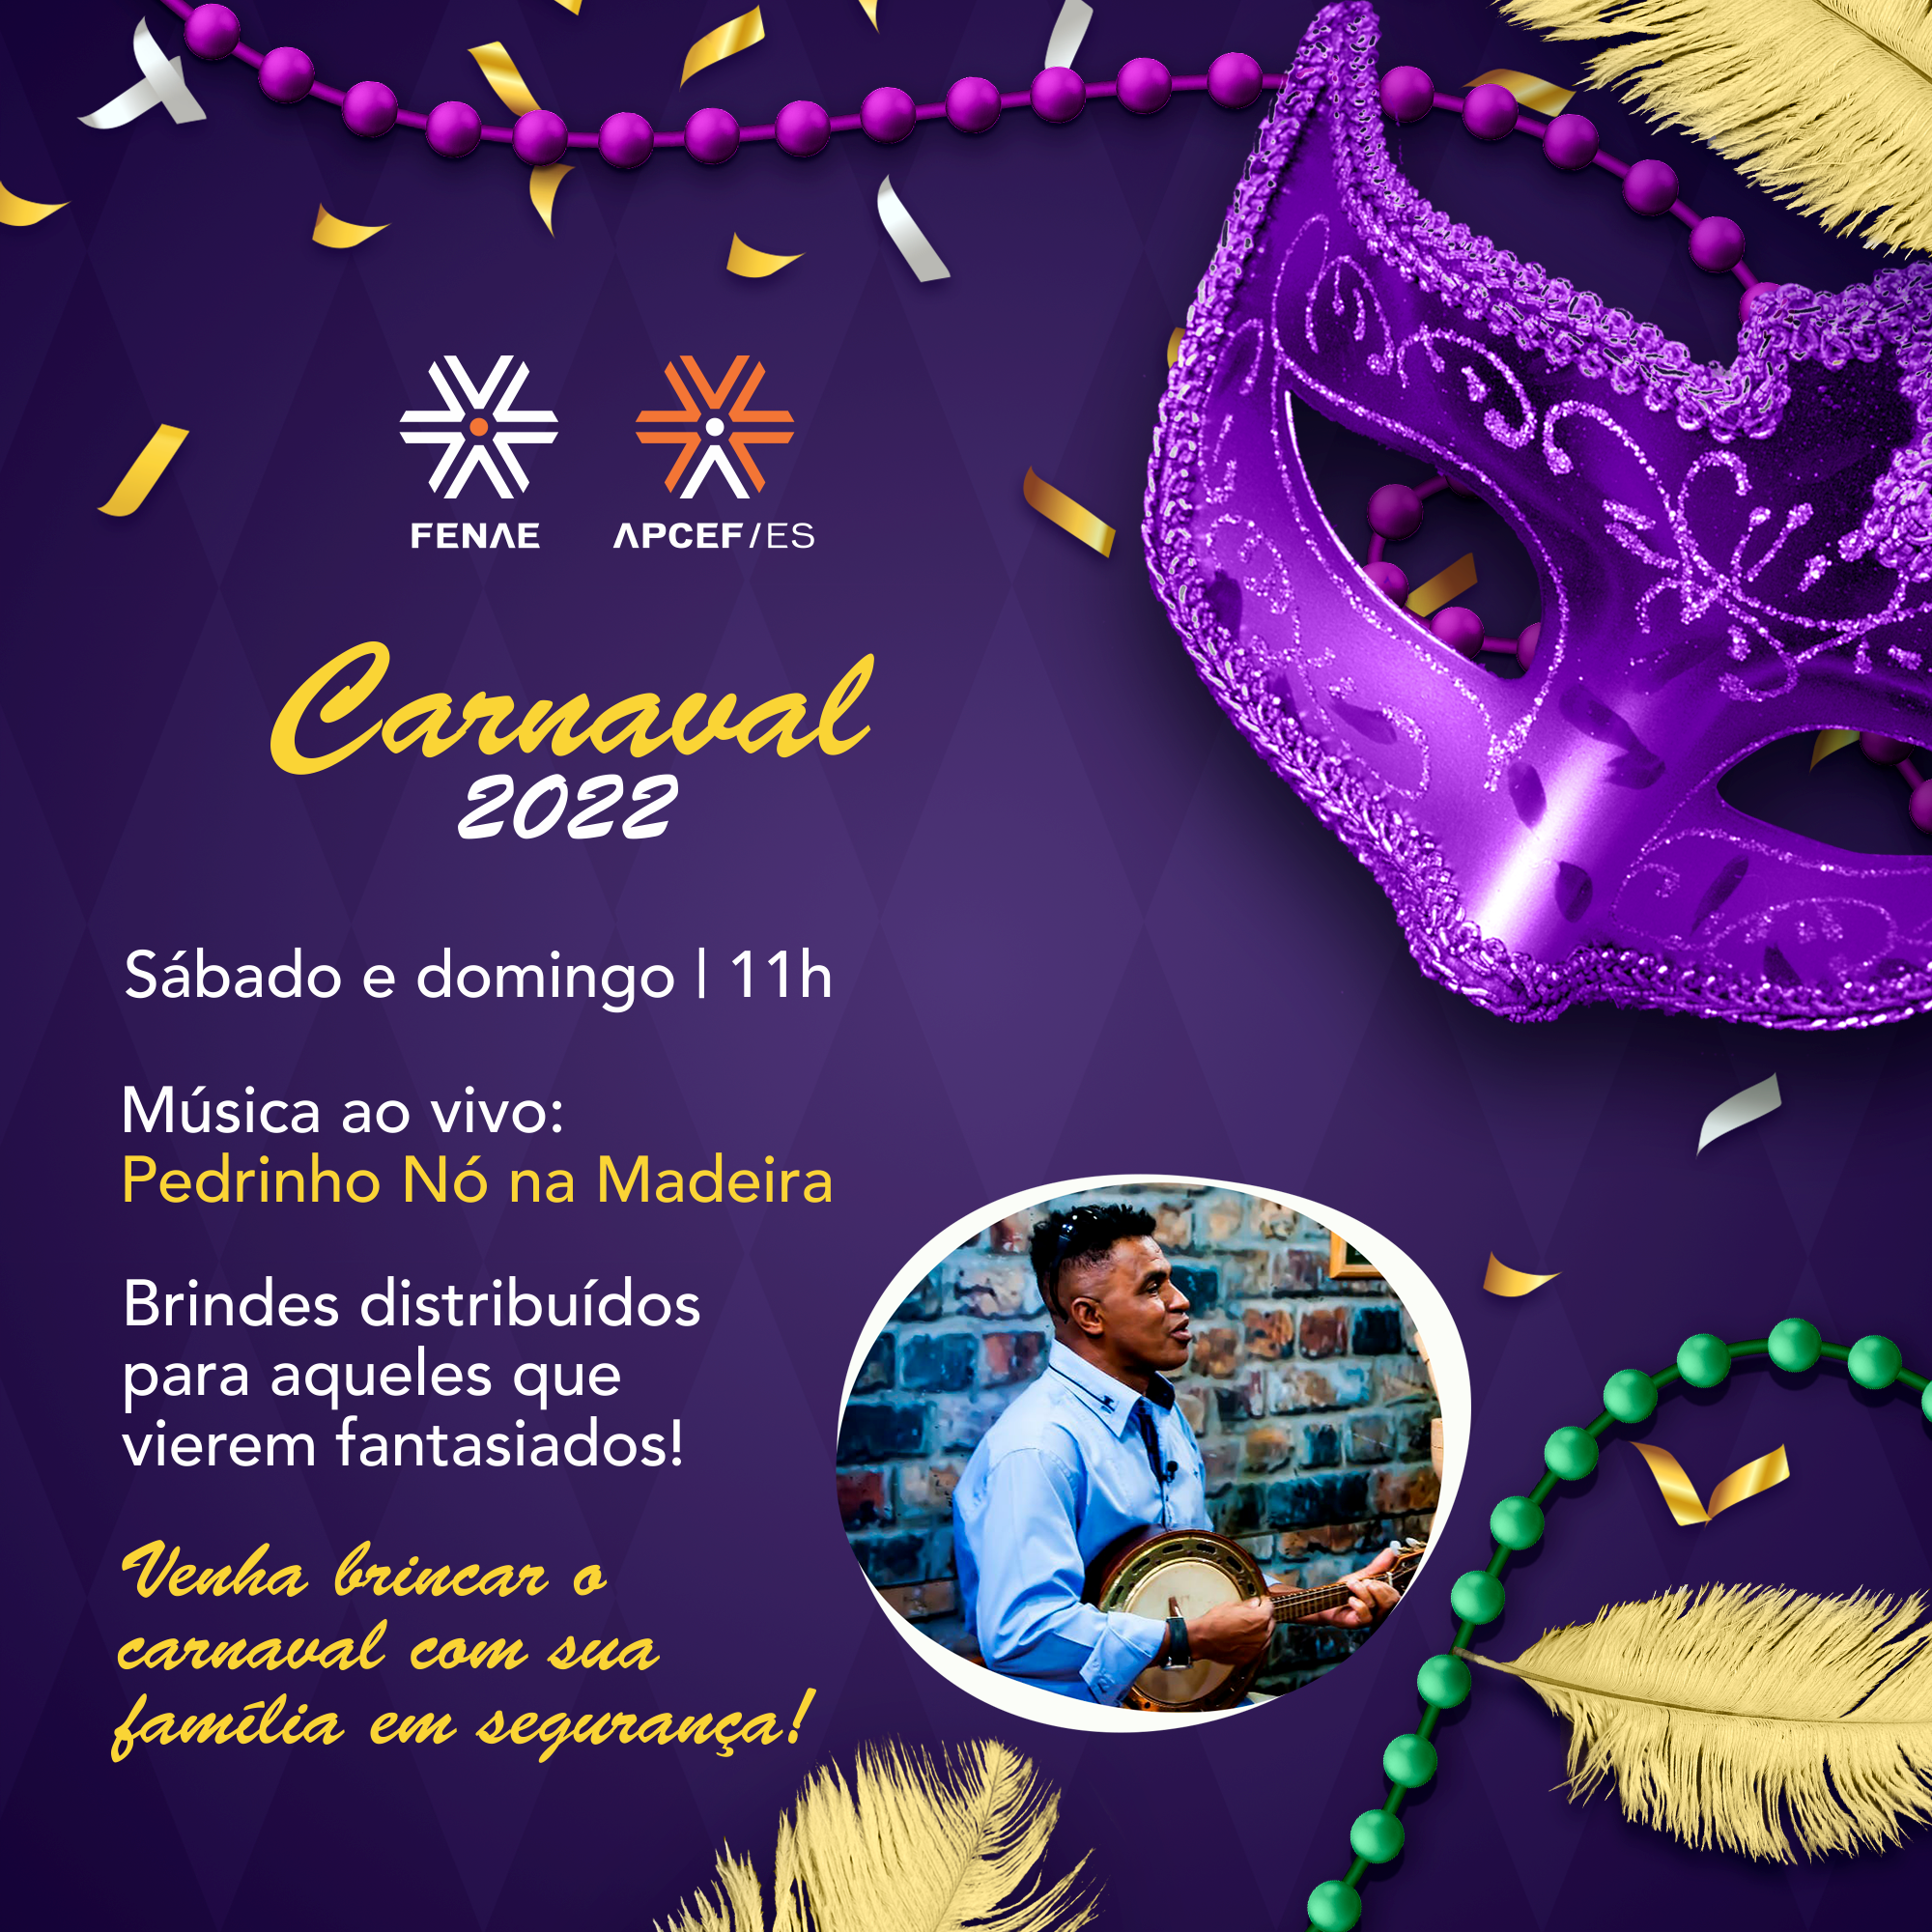 Carnaval 2022 - Post 1.png